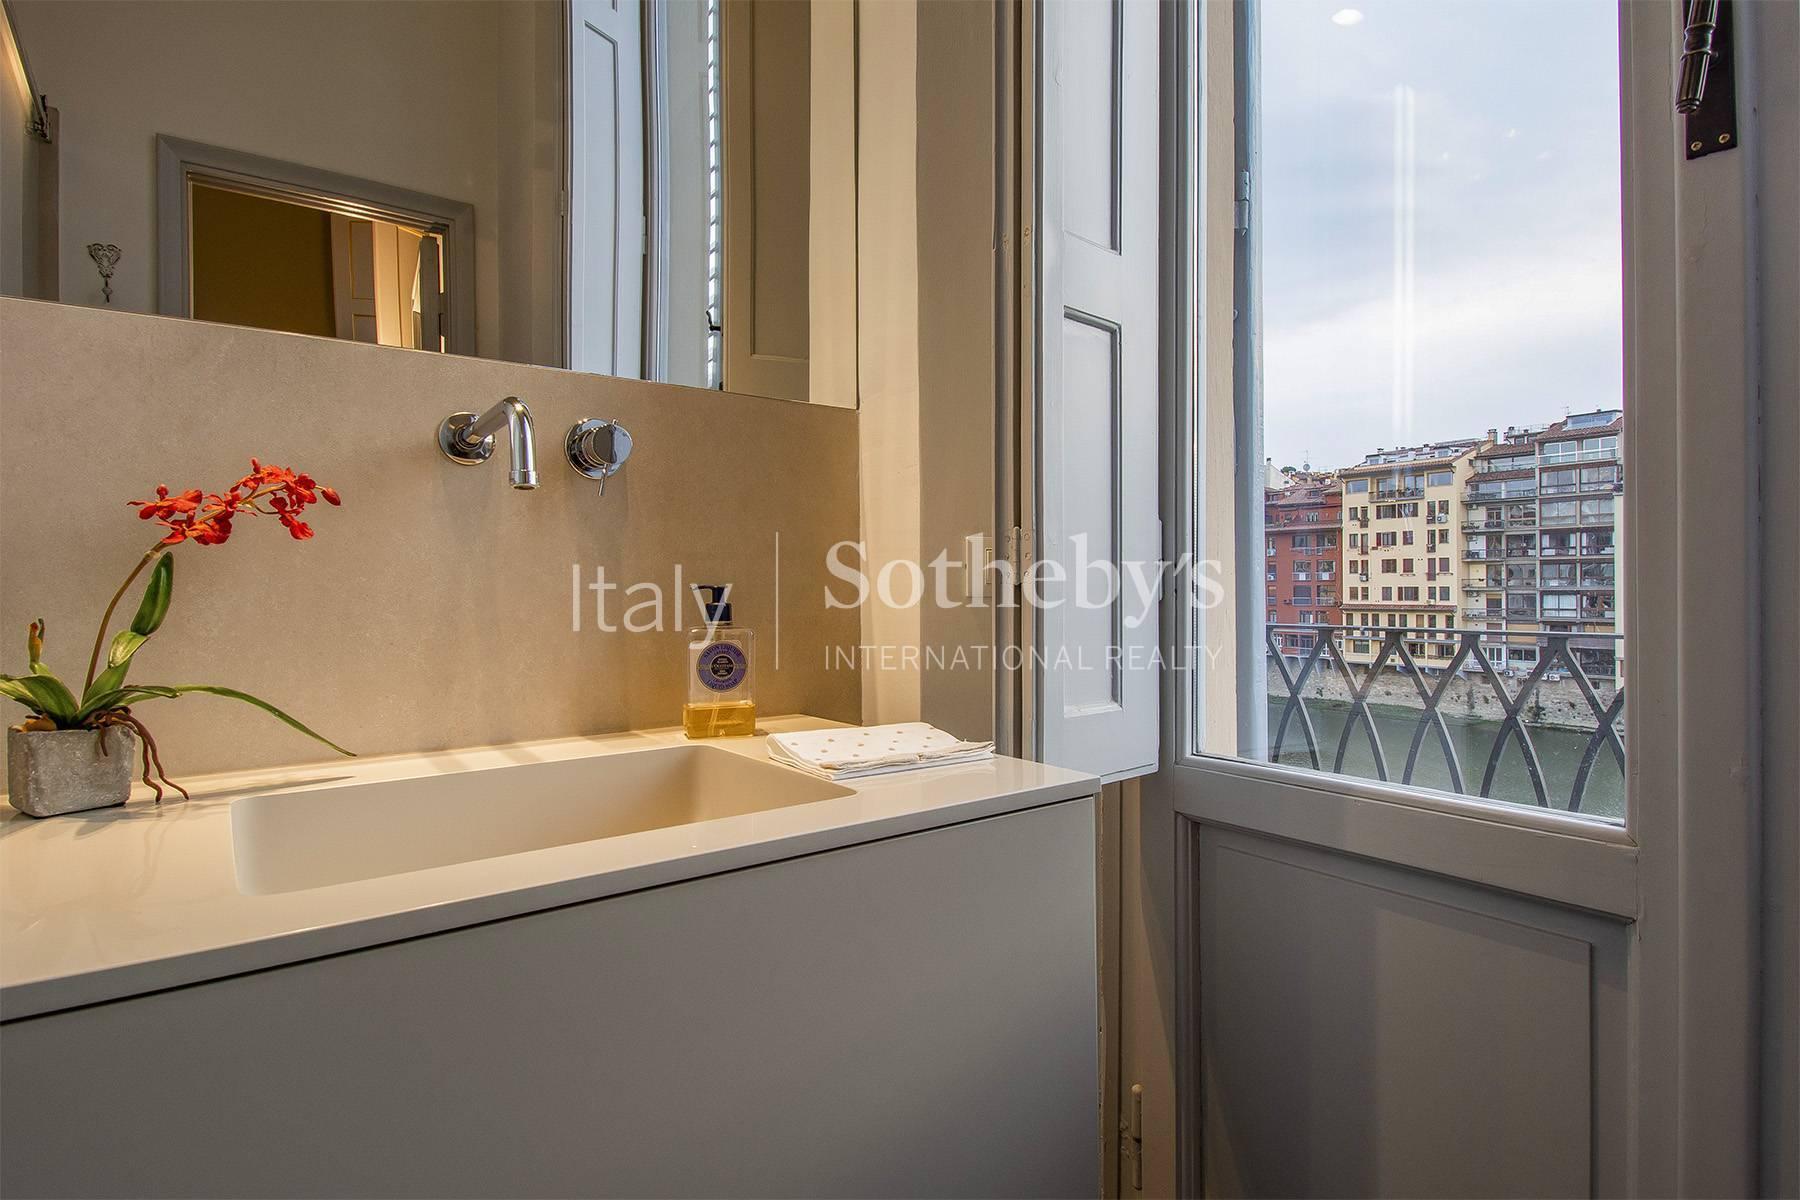 Appartamento moderno con vista su Ponte Vecchio - 11